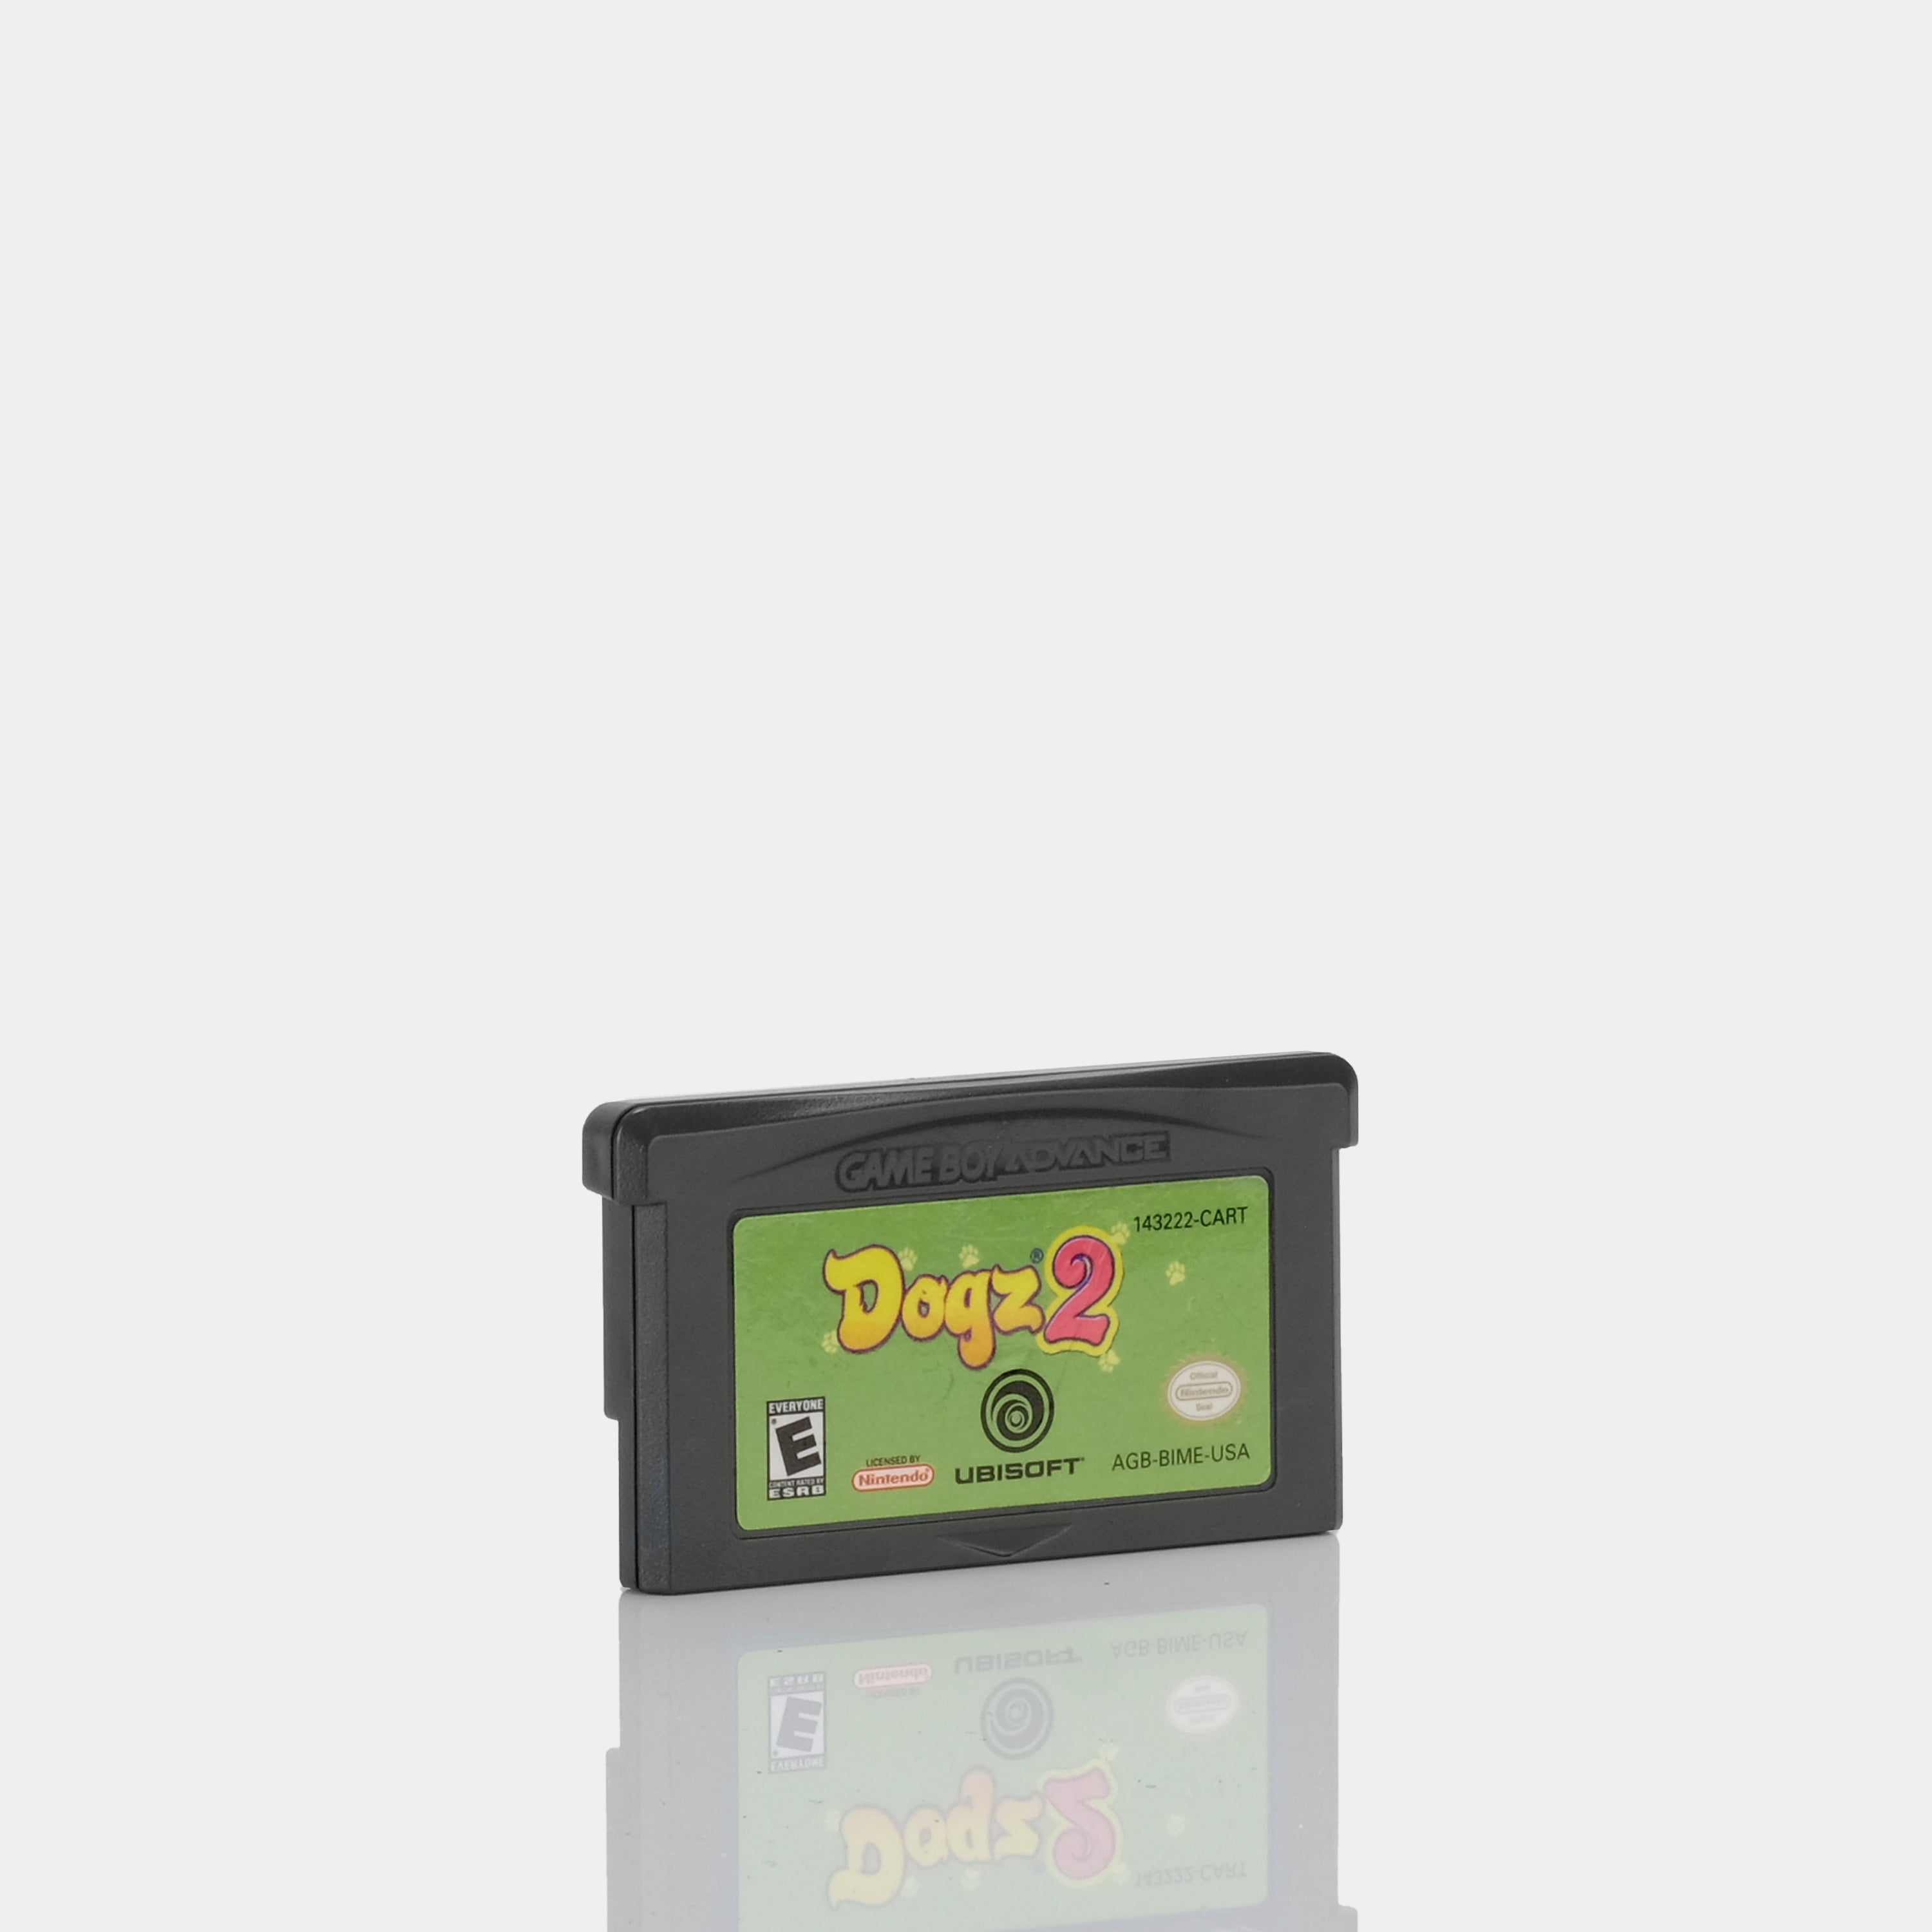 Dogz 2 Game Boy Advance Game